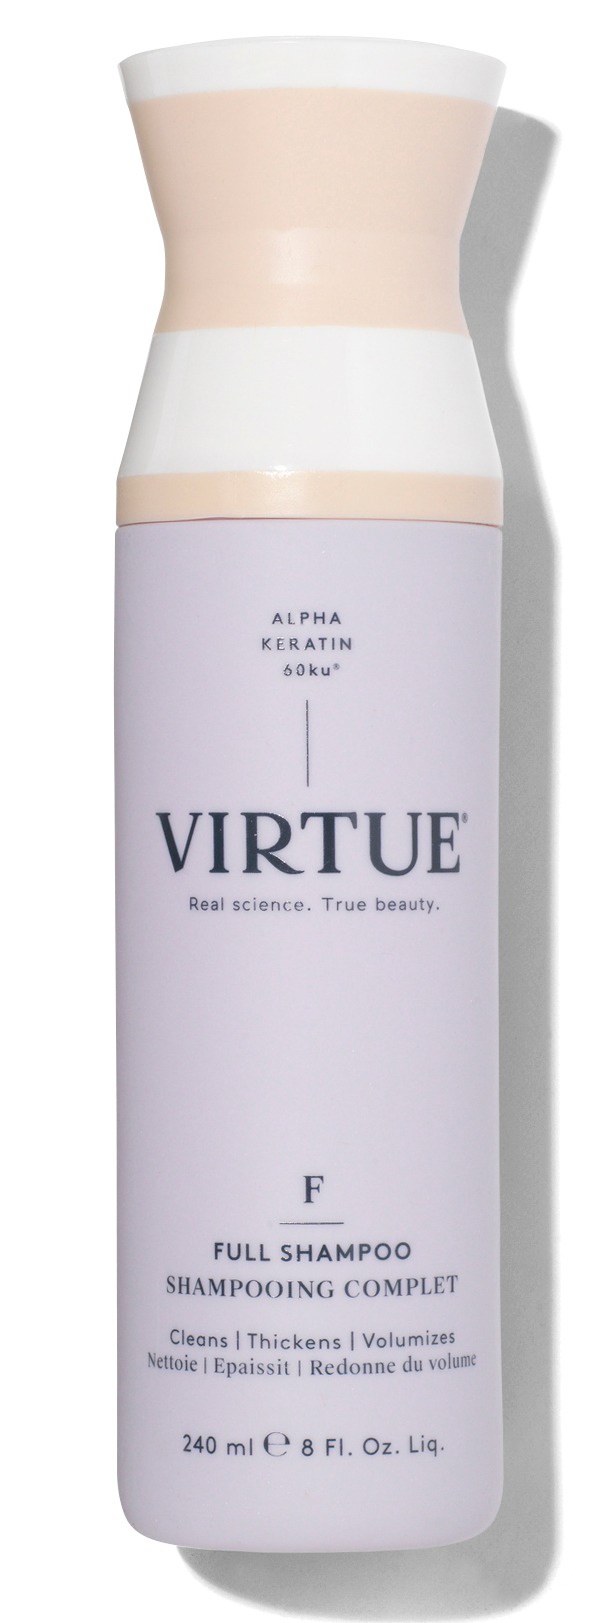 virtue Full Shampoo